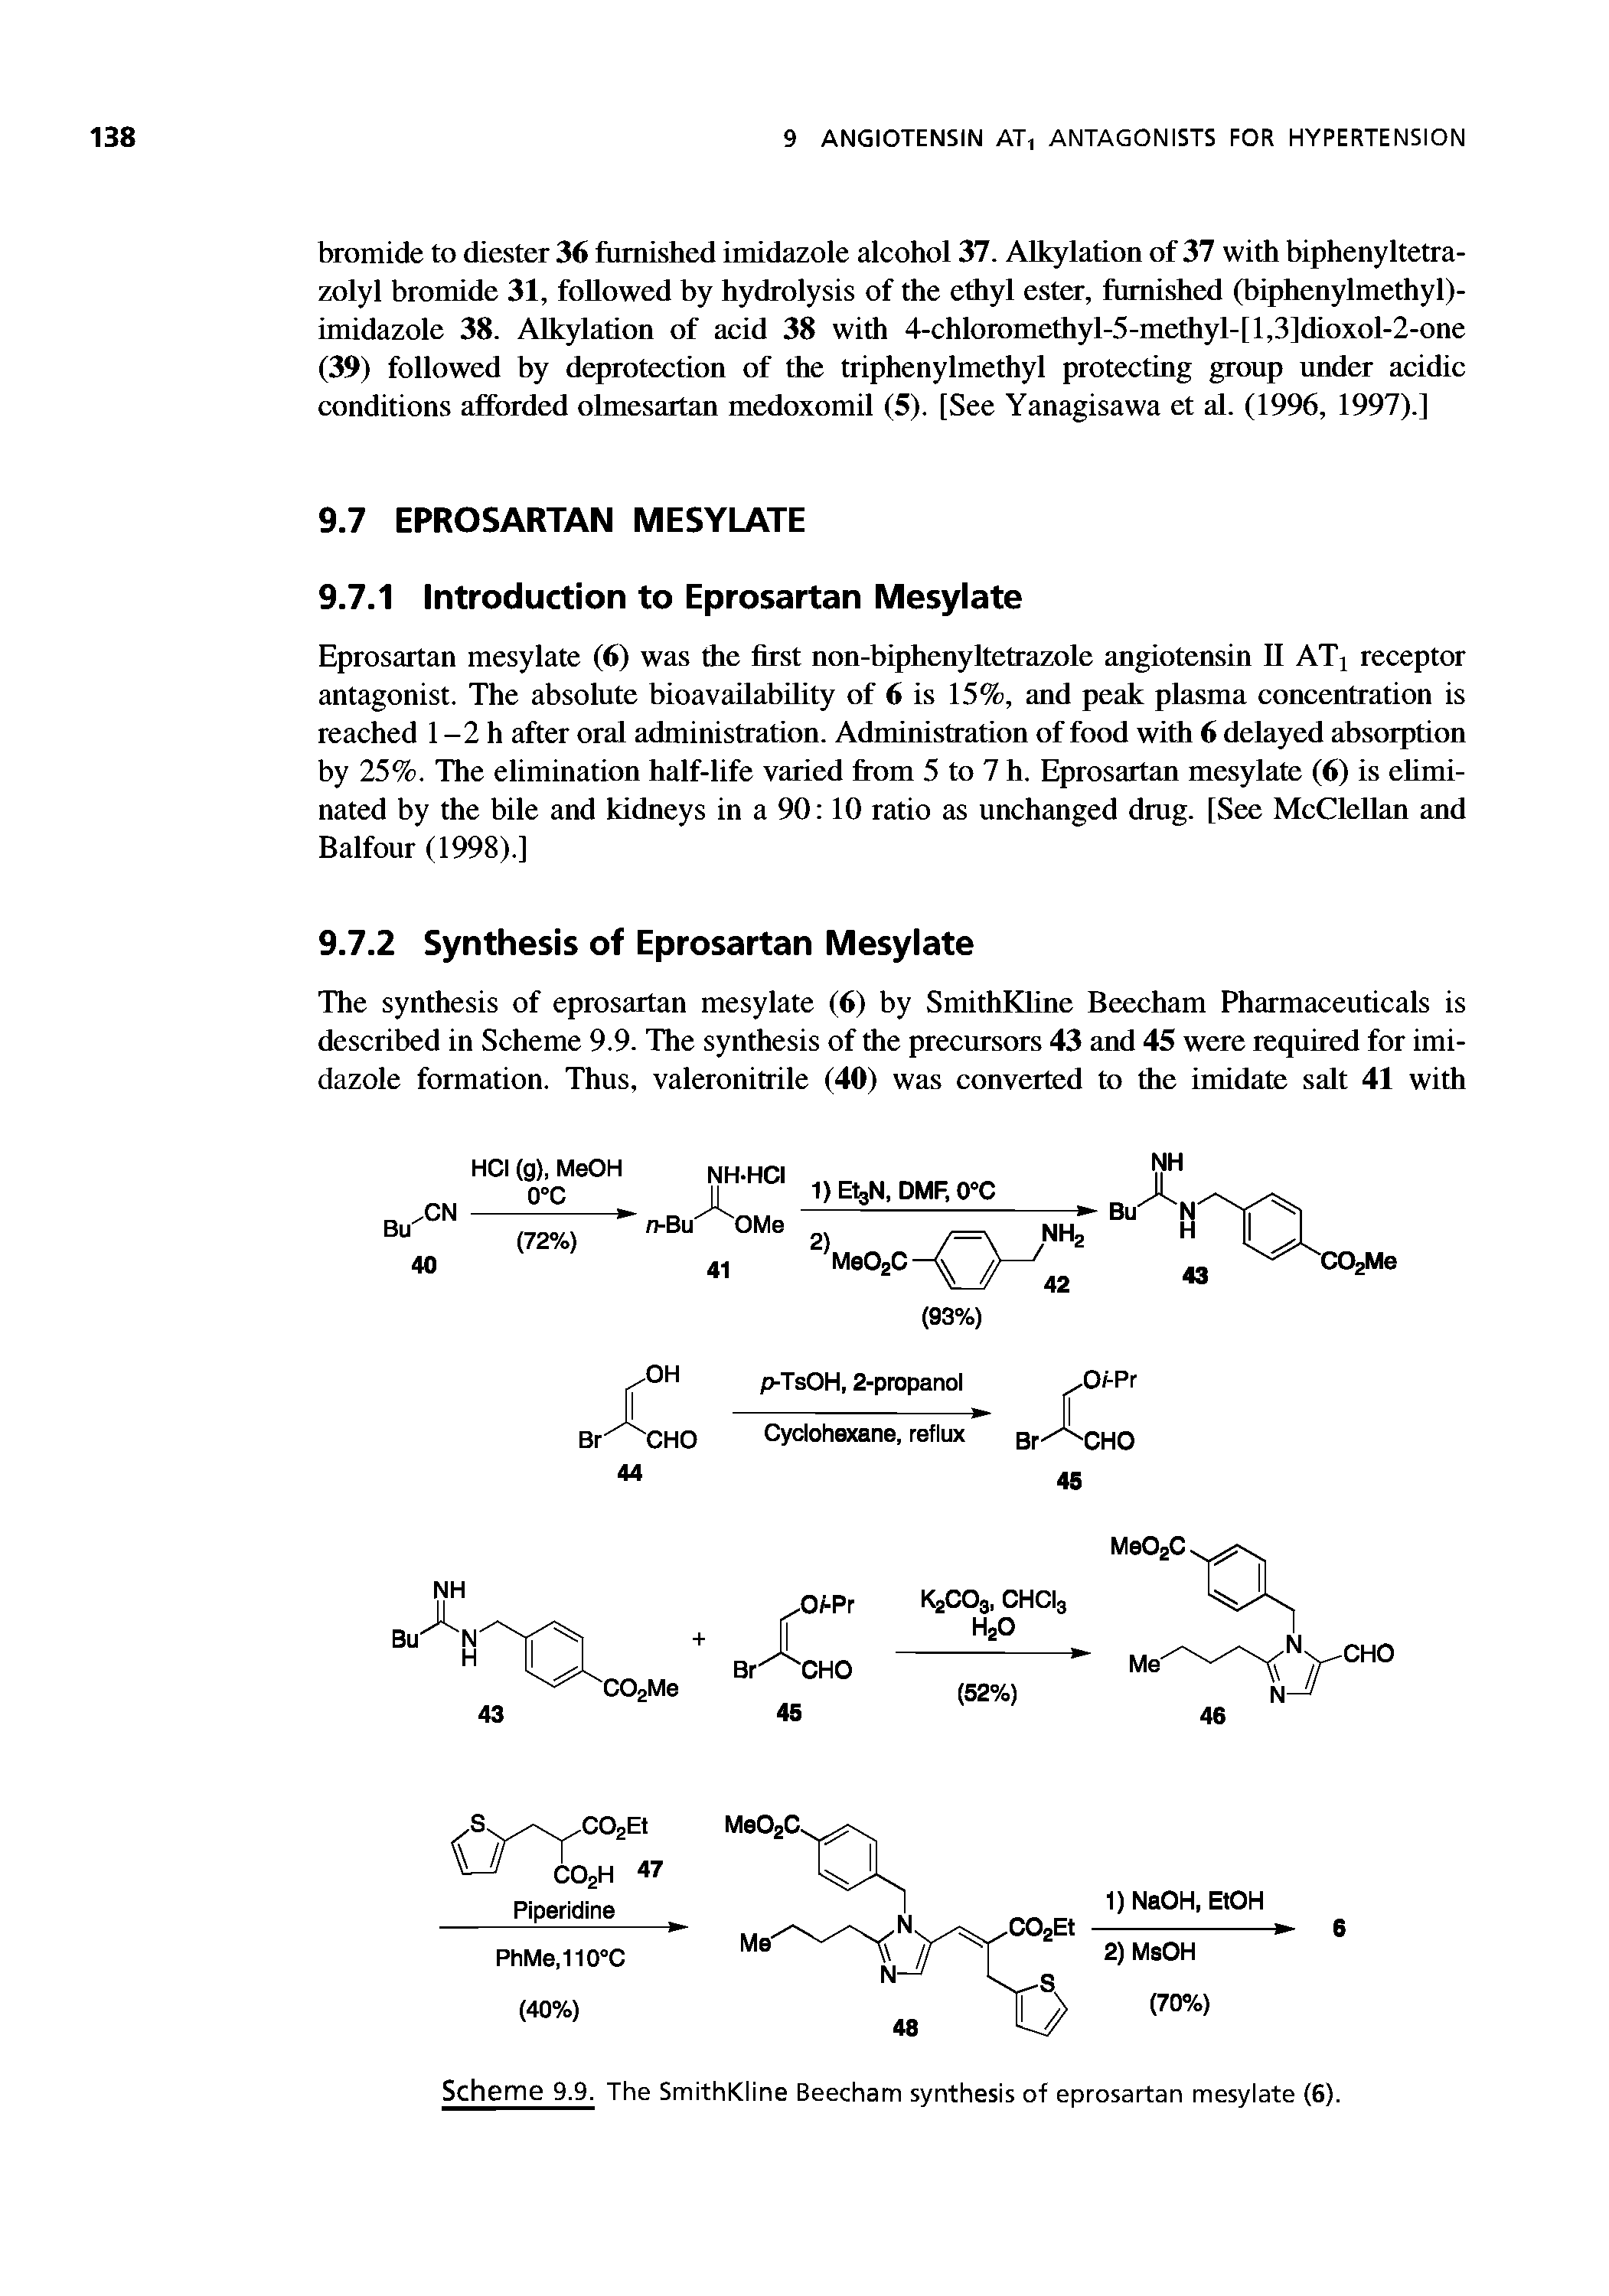 Scheme 9.9. The SmithKline Beecham synthesis of eprosartan mesylate (6).